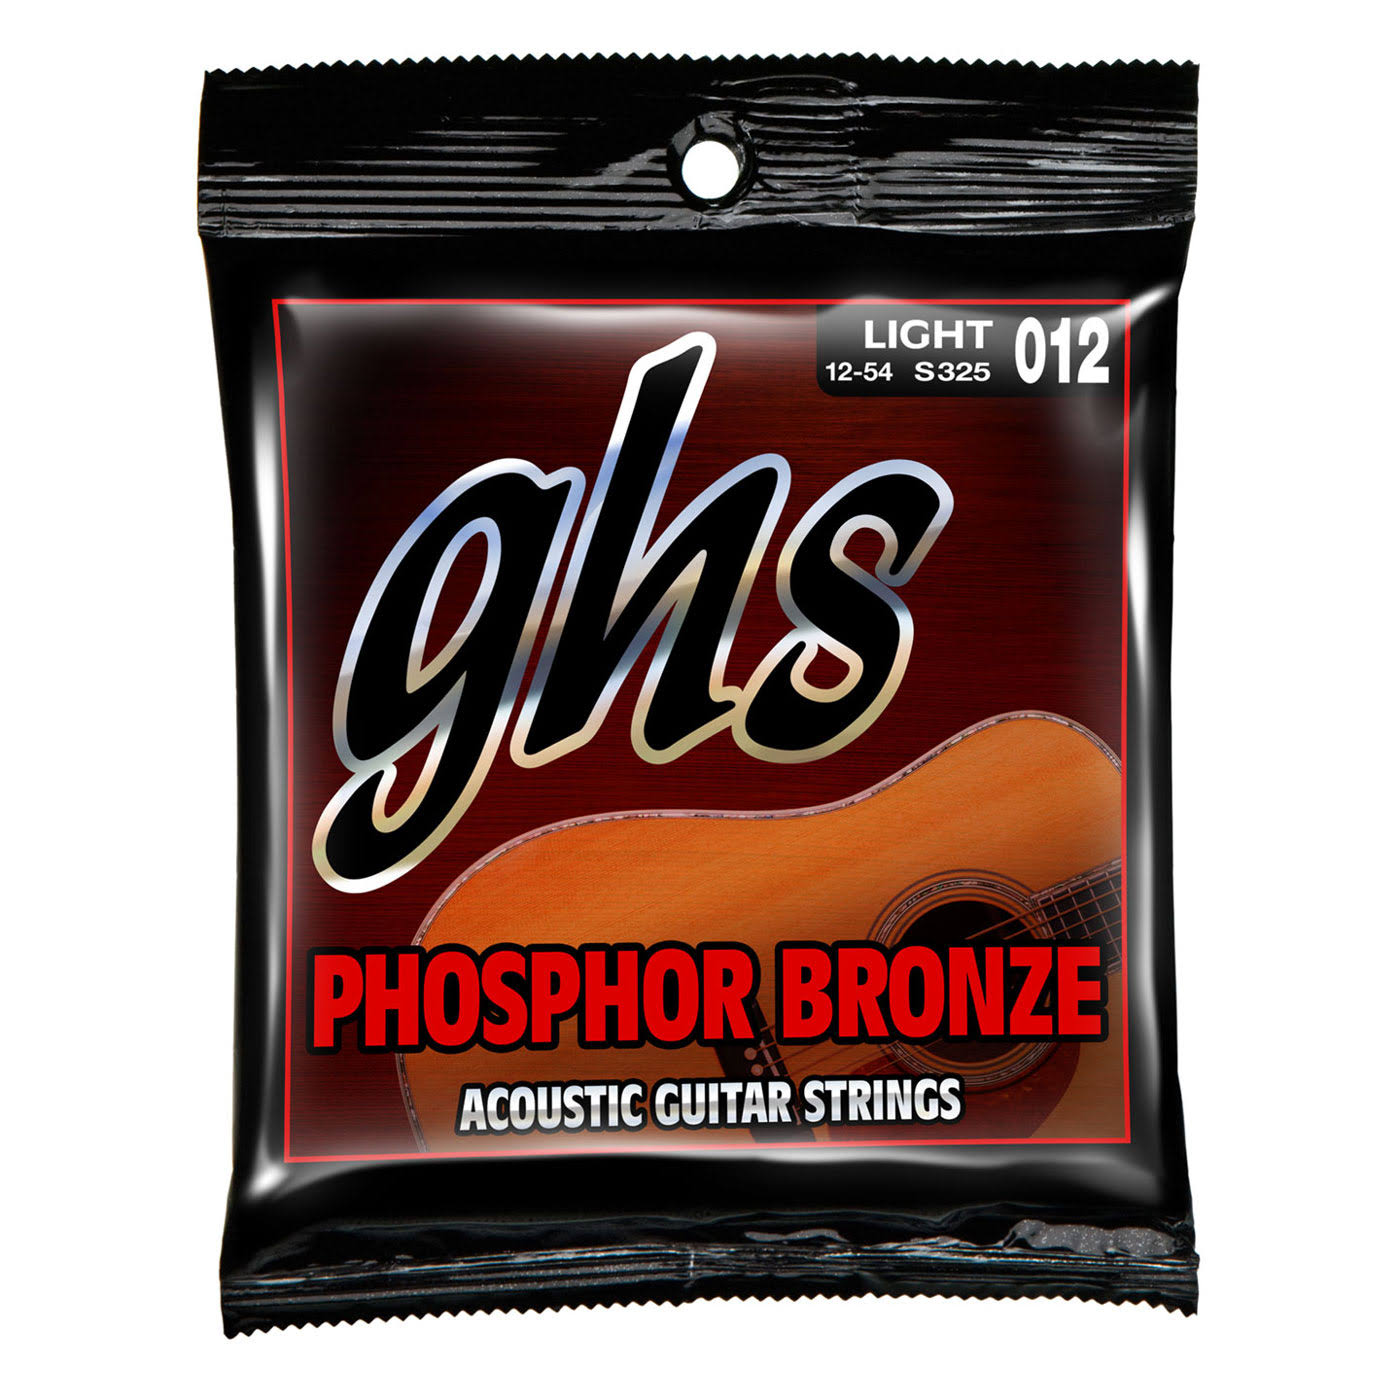 Ghs Phosphor Bronze Acoustic Guitar Strings - Light gauge